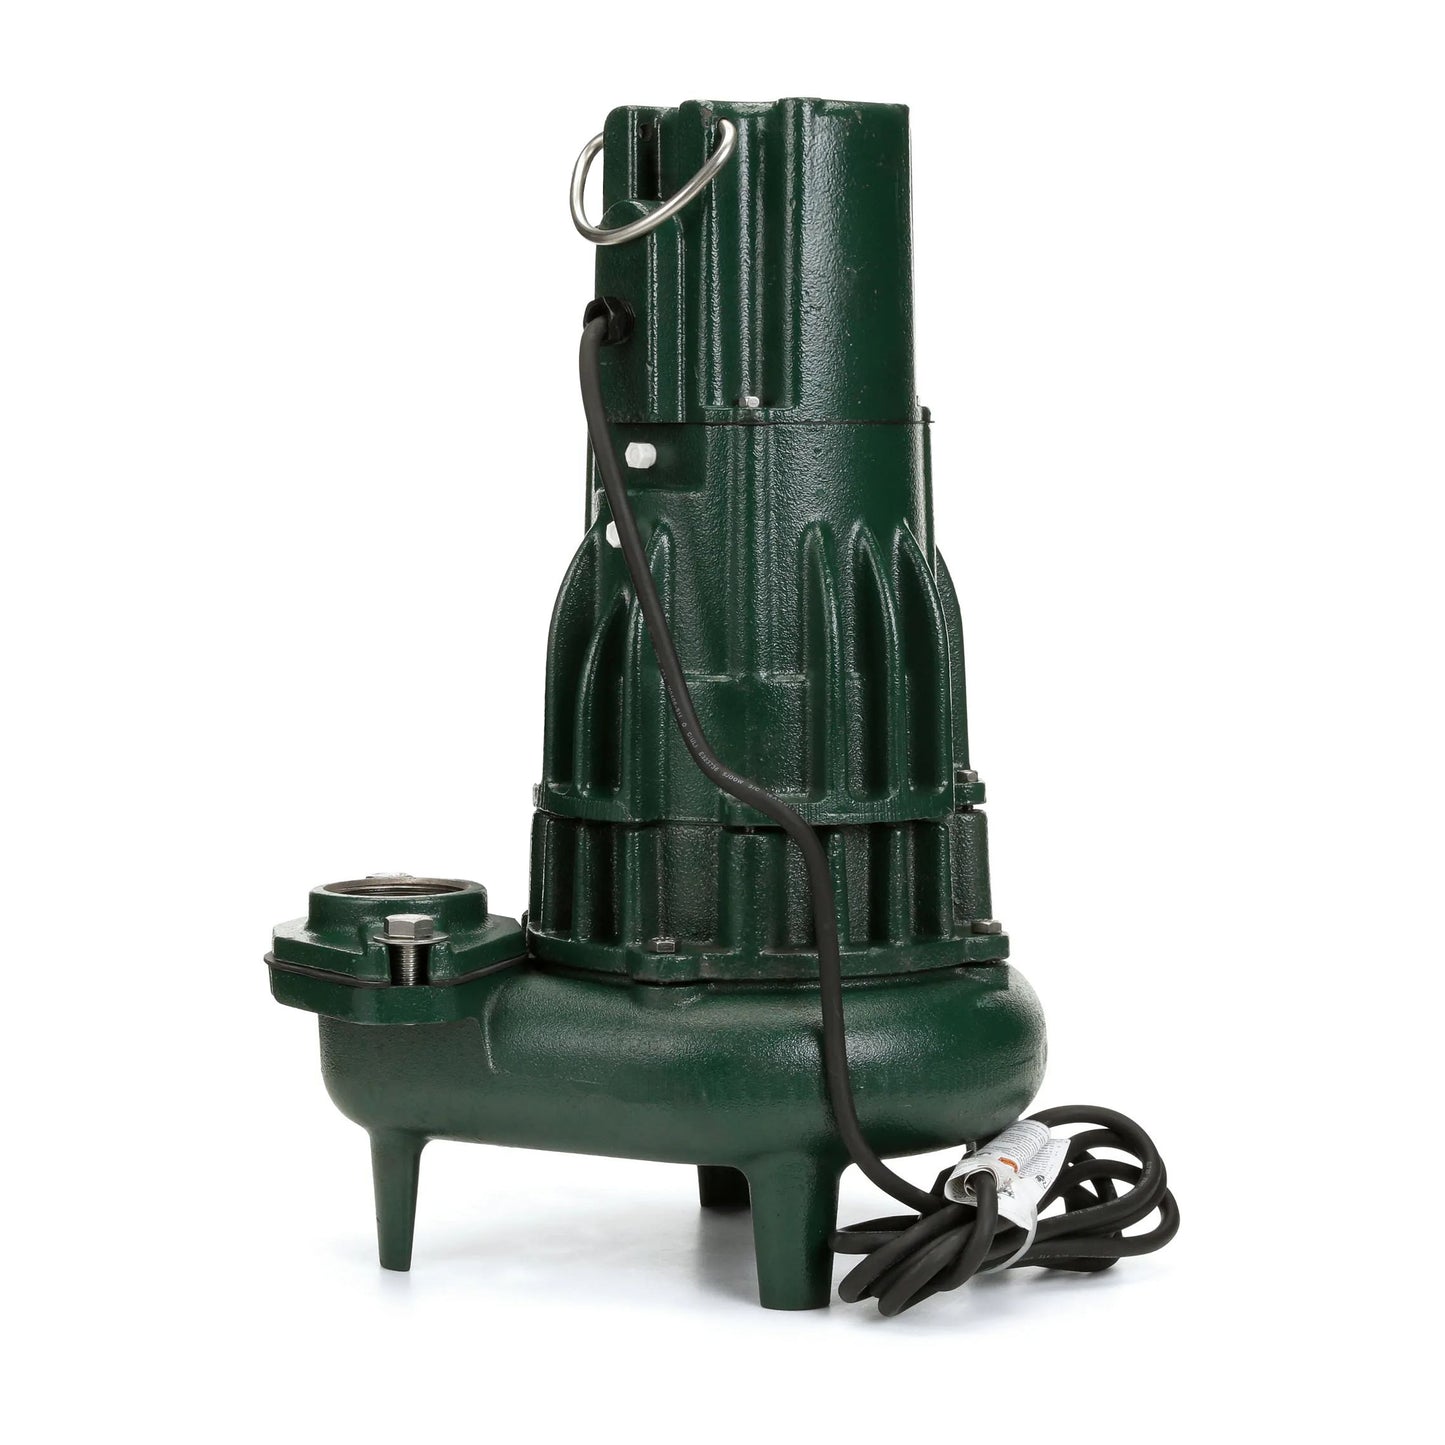 282-0002 - N282 Series Non-Automatic Cast Iron Sewage Pump, 115V, 1/2 HP